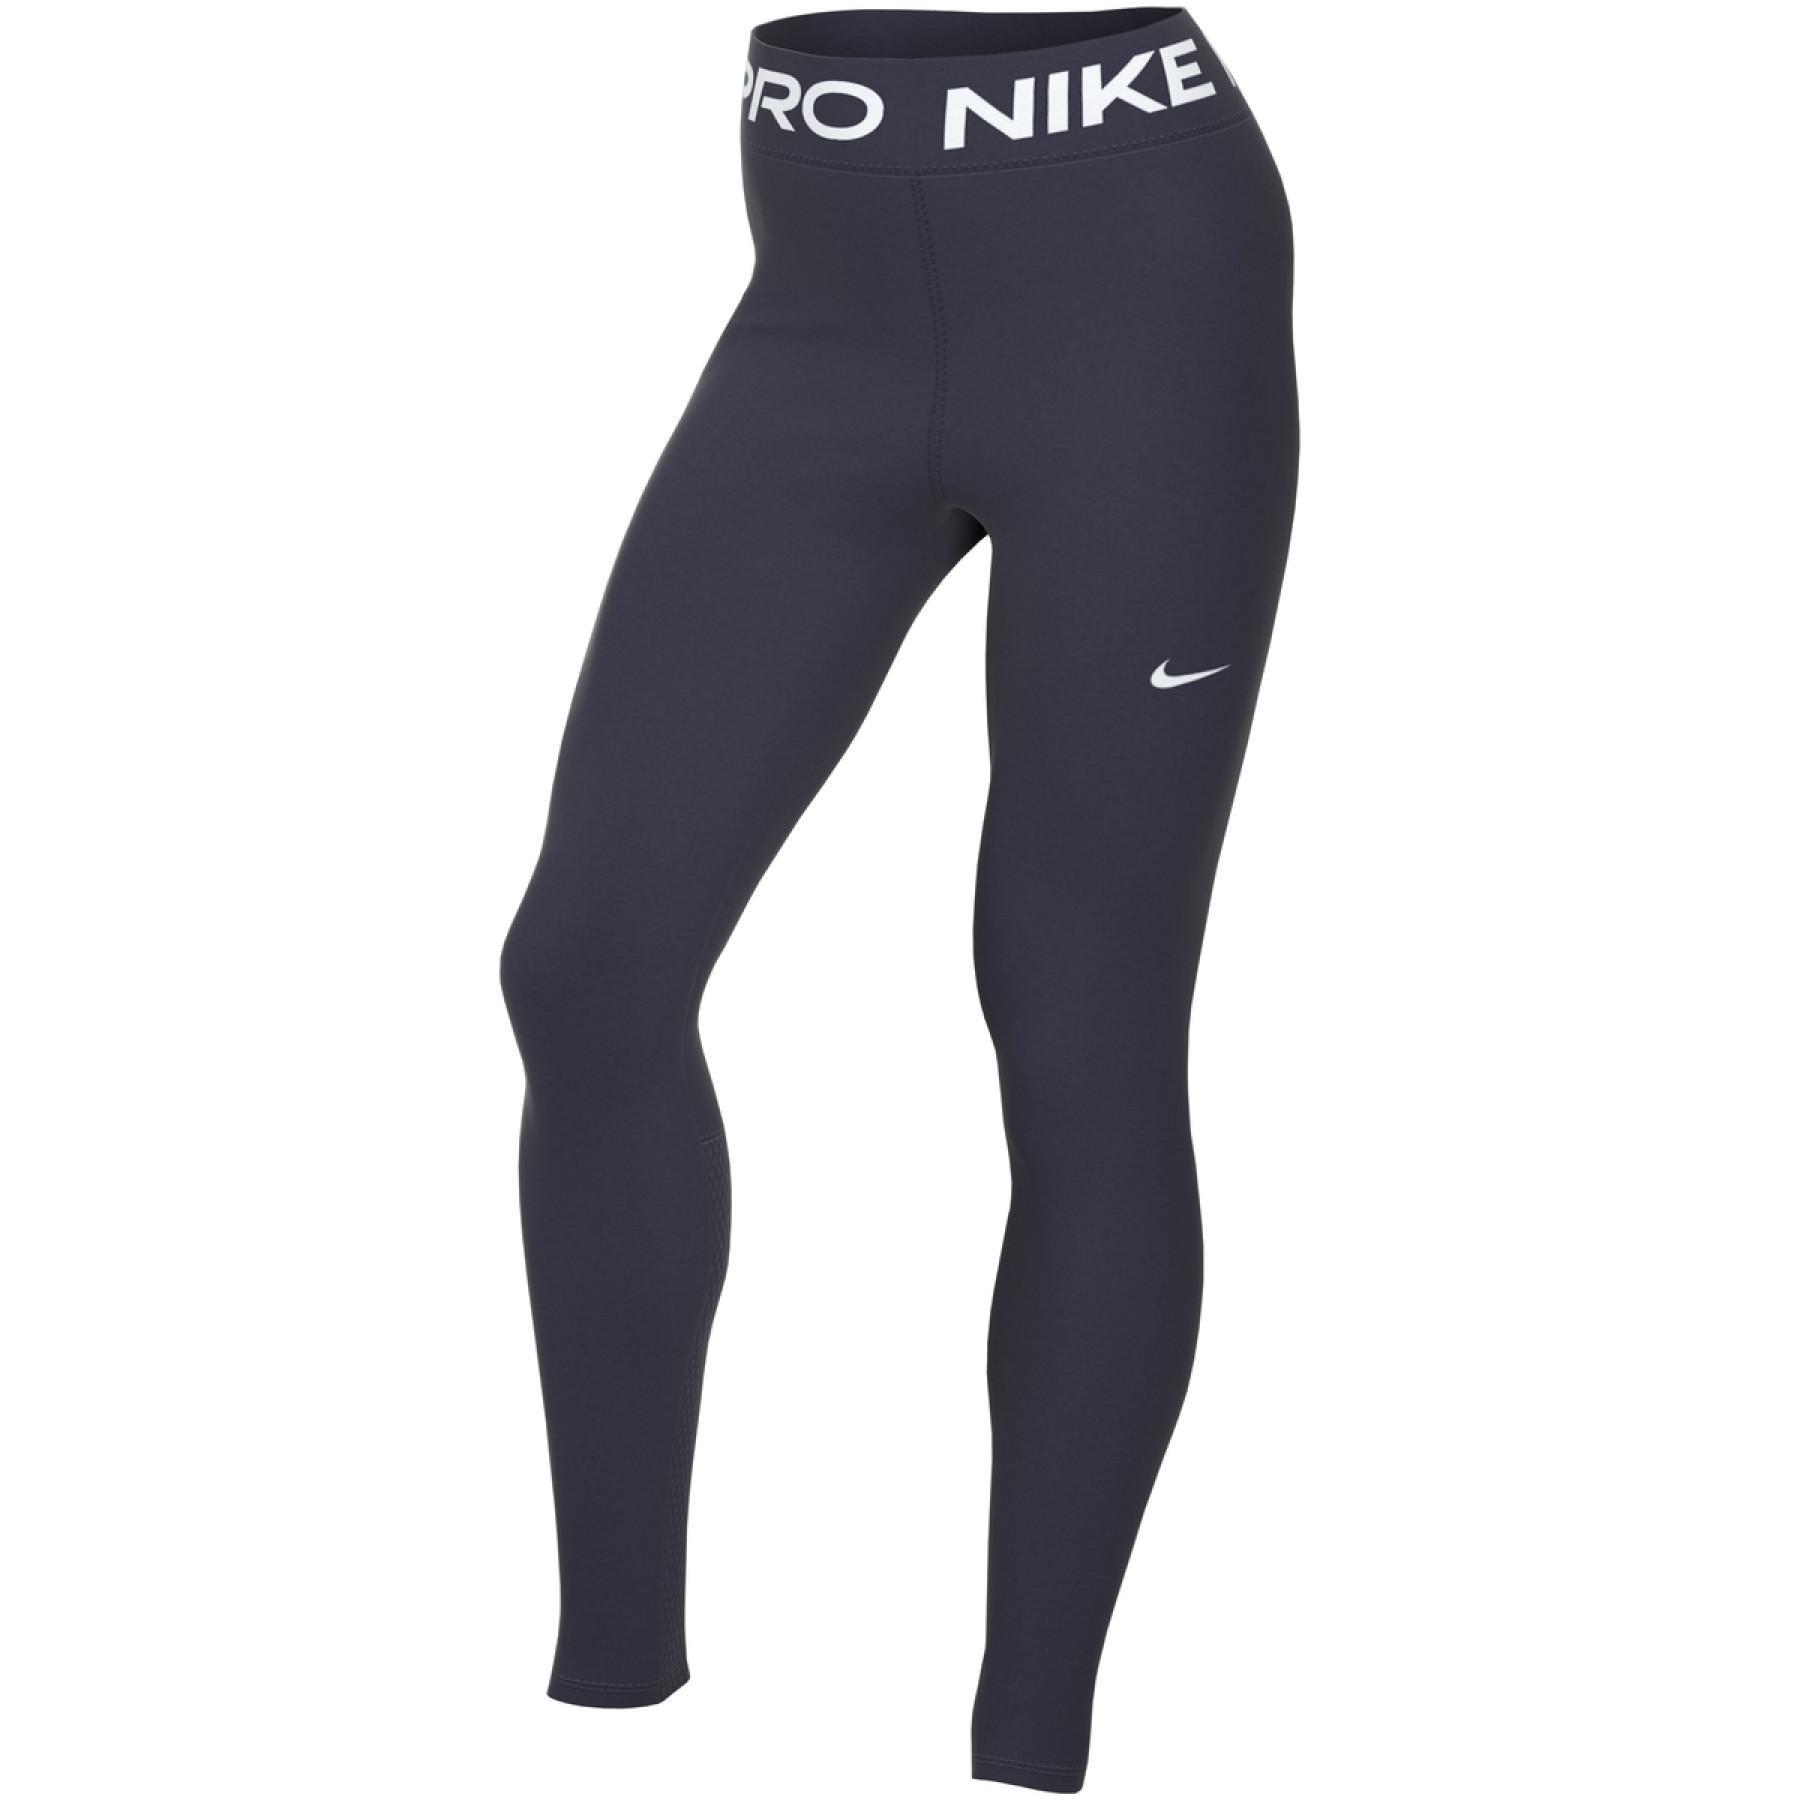 Damen-Leggings Nike Pro 365